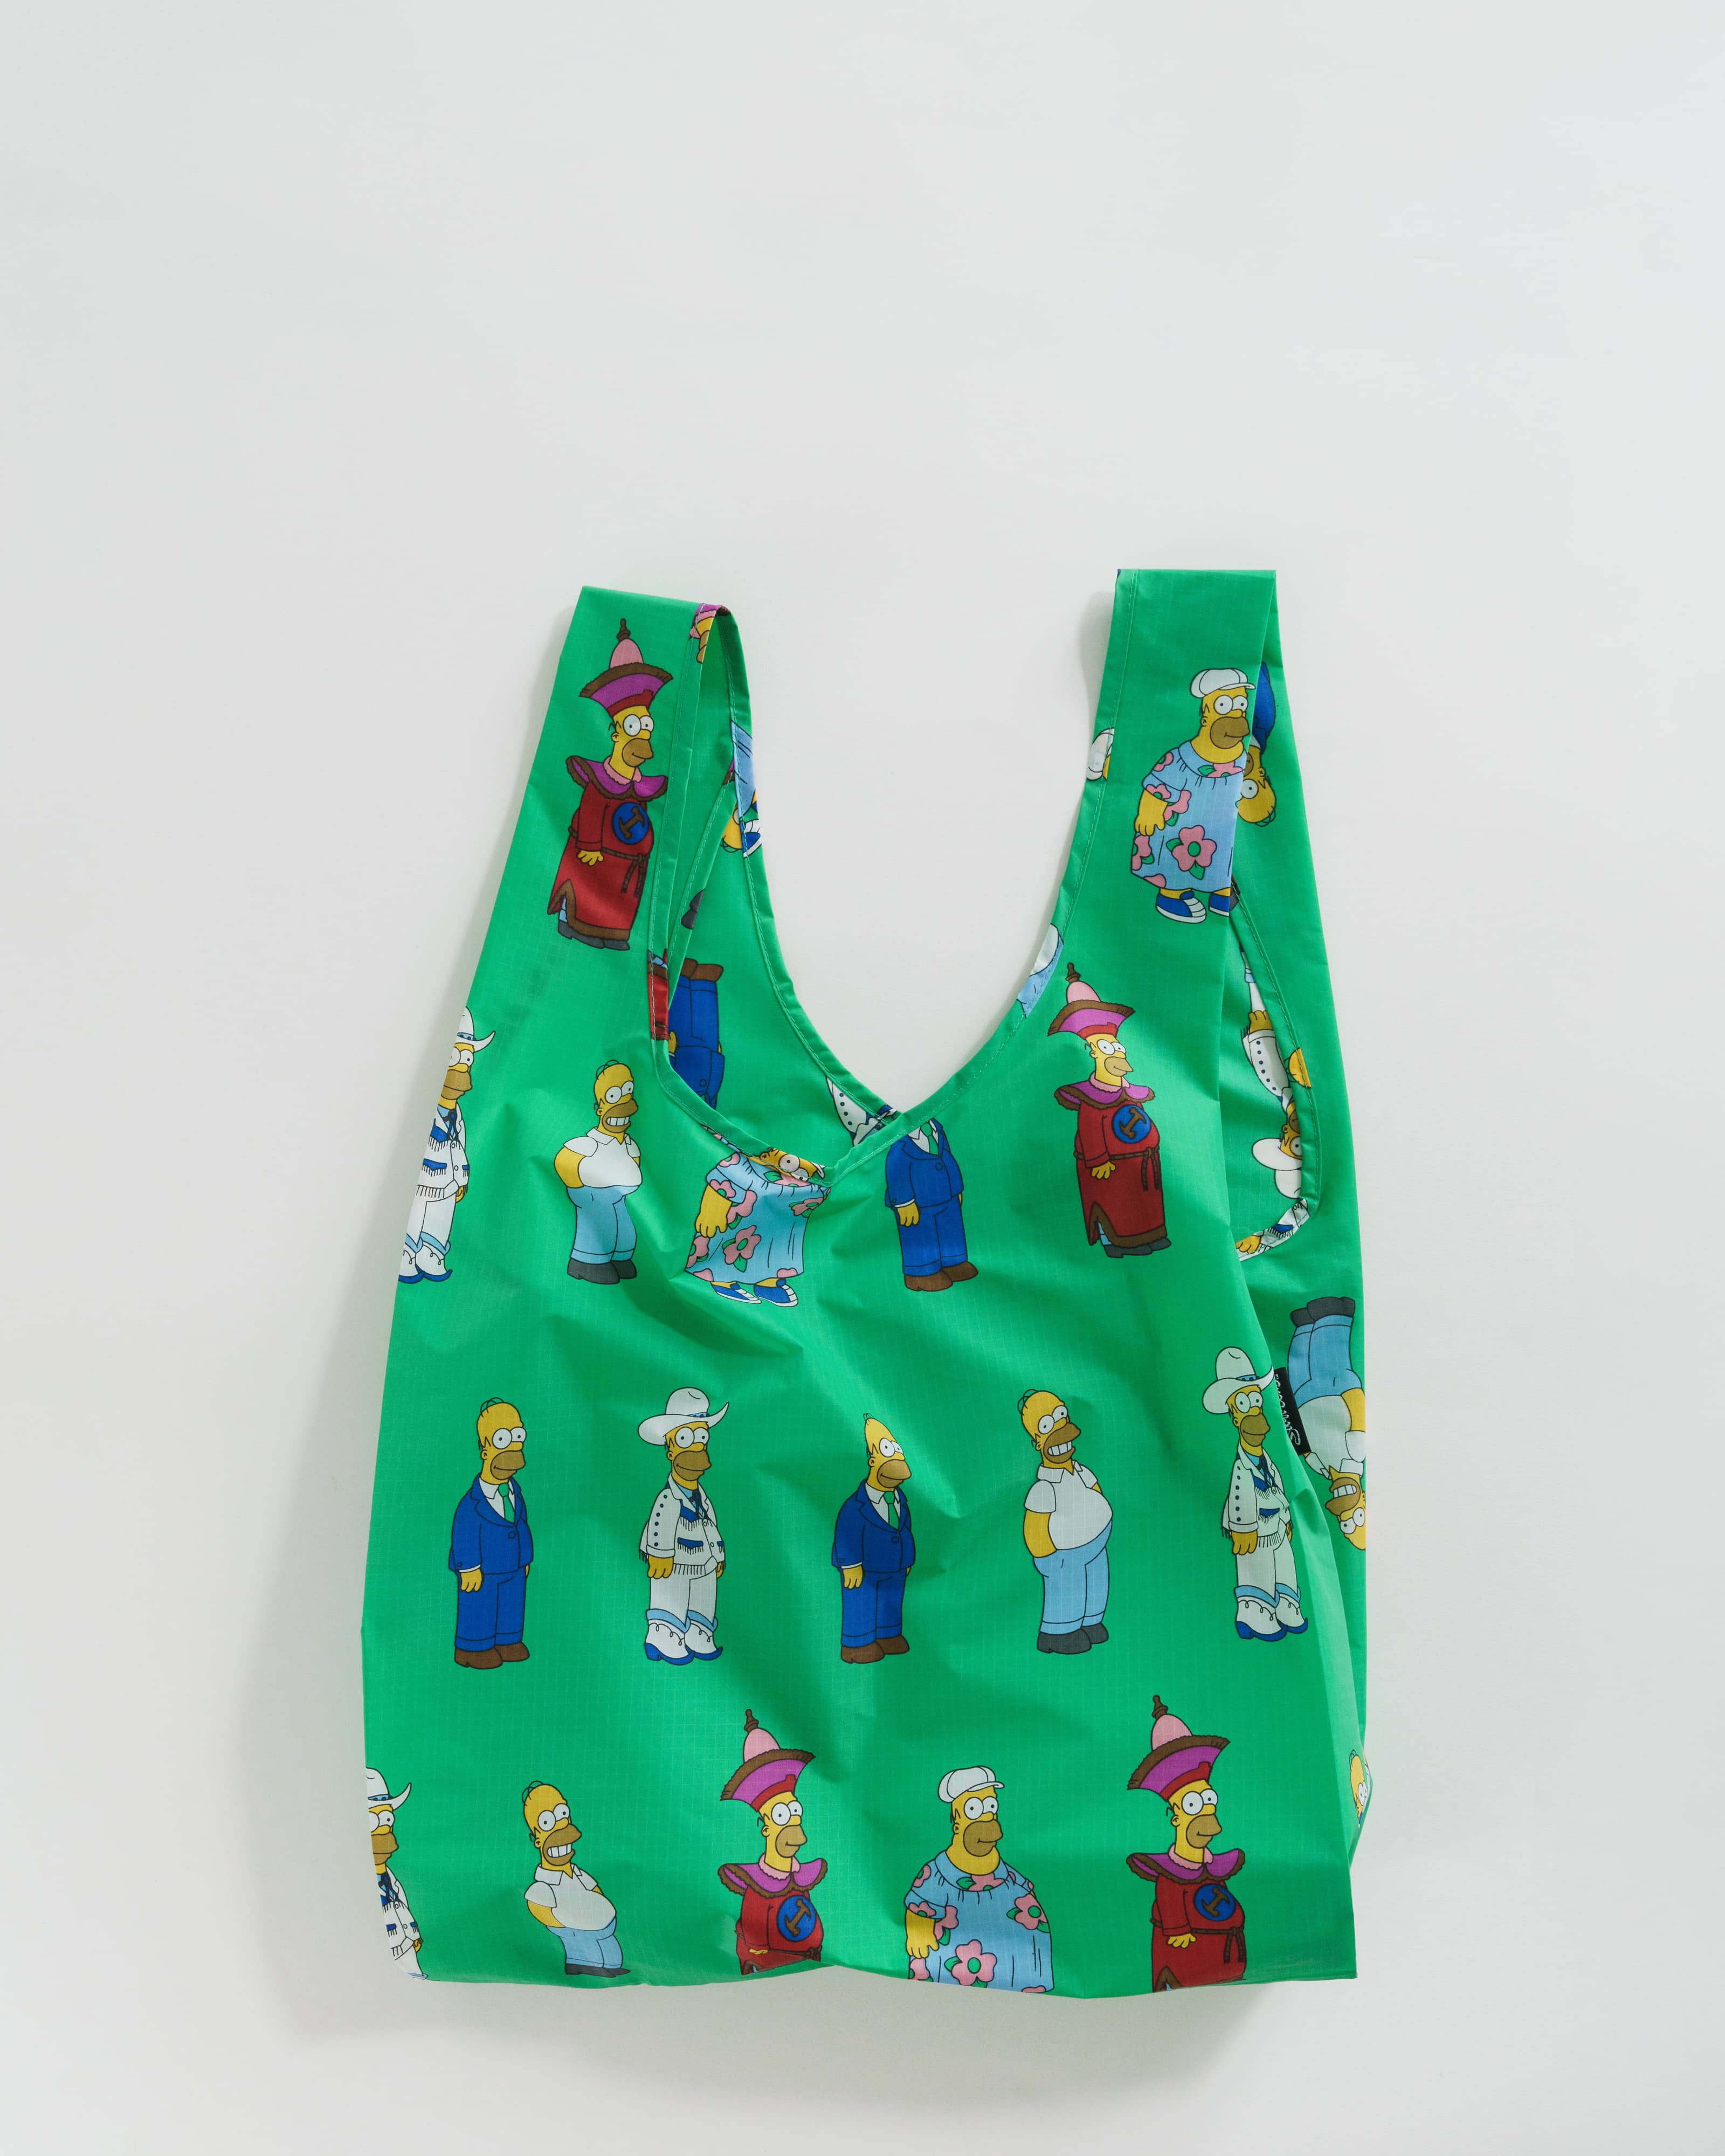 Giant Needlepoint Tote Bag – Evergreen Needlepoint